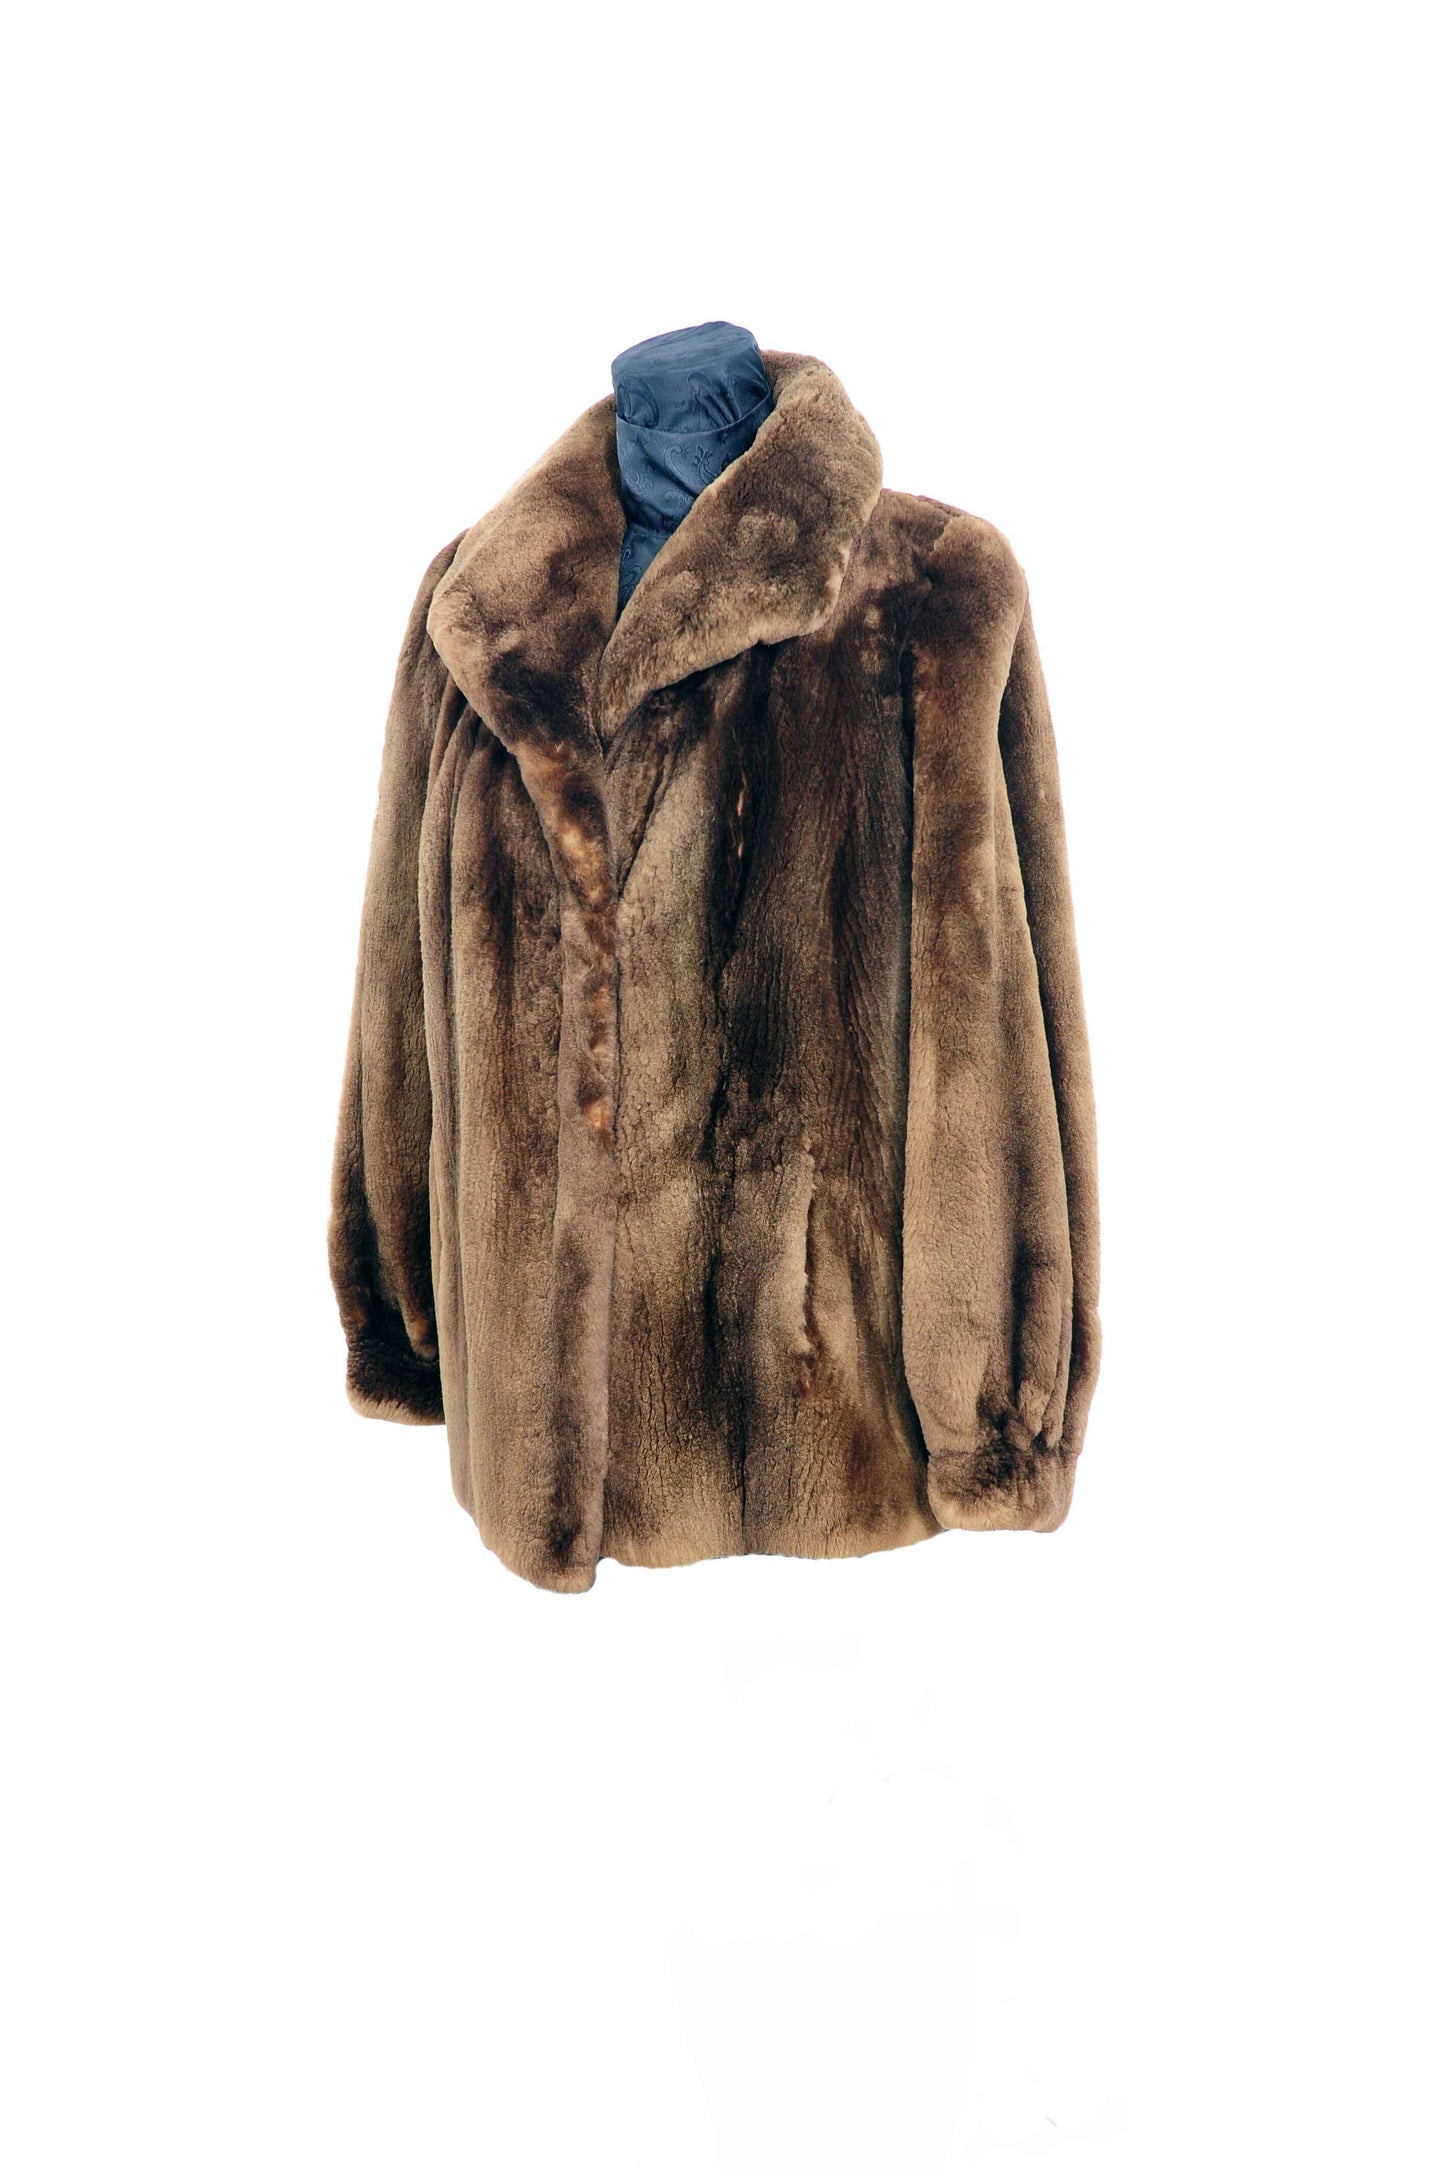 Pre-Owned Sheared Beaver Jacket Starlight Furs 